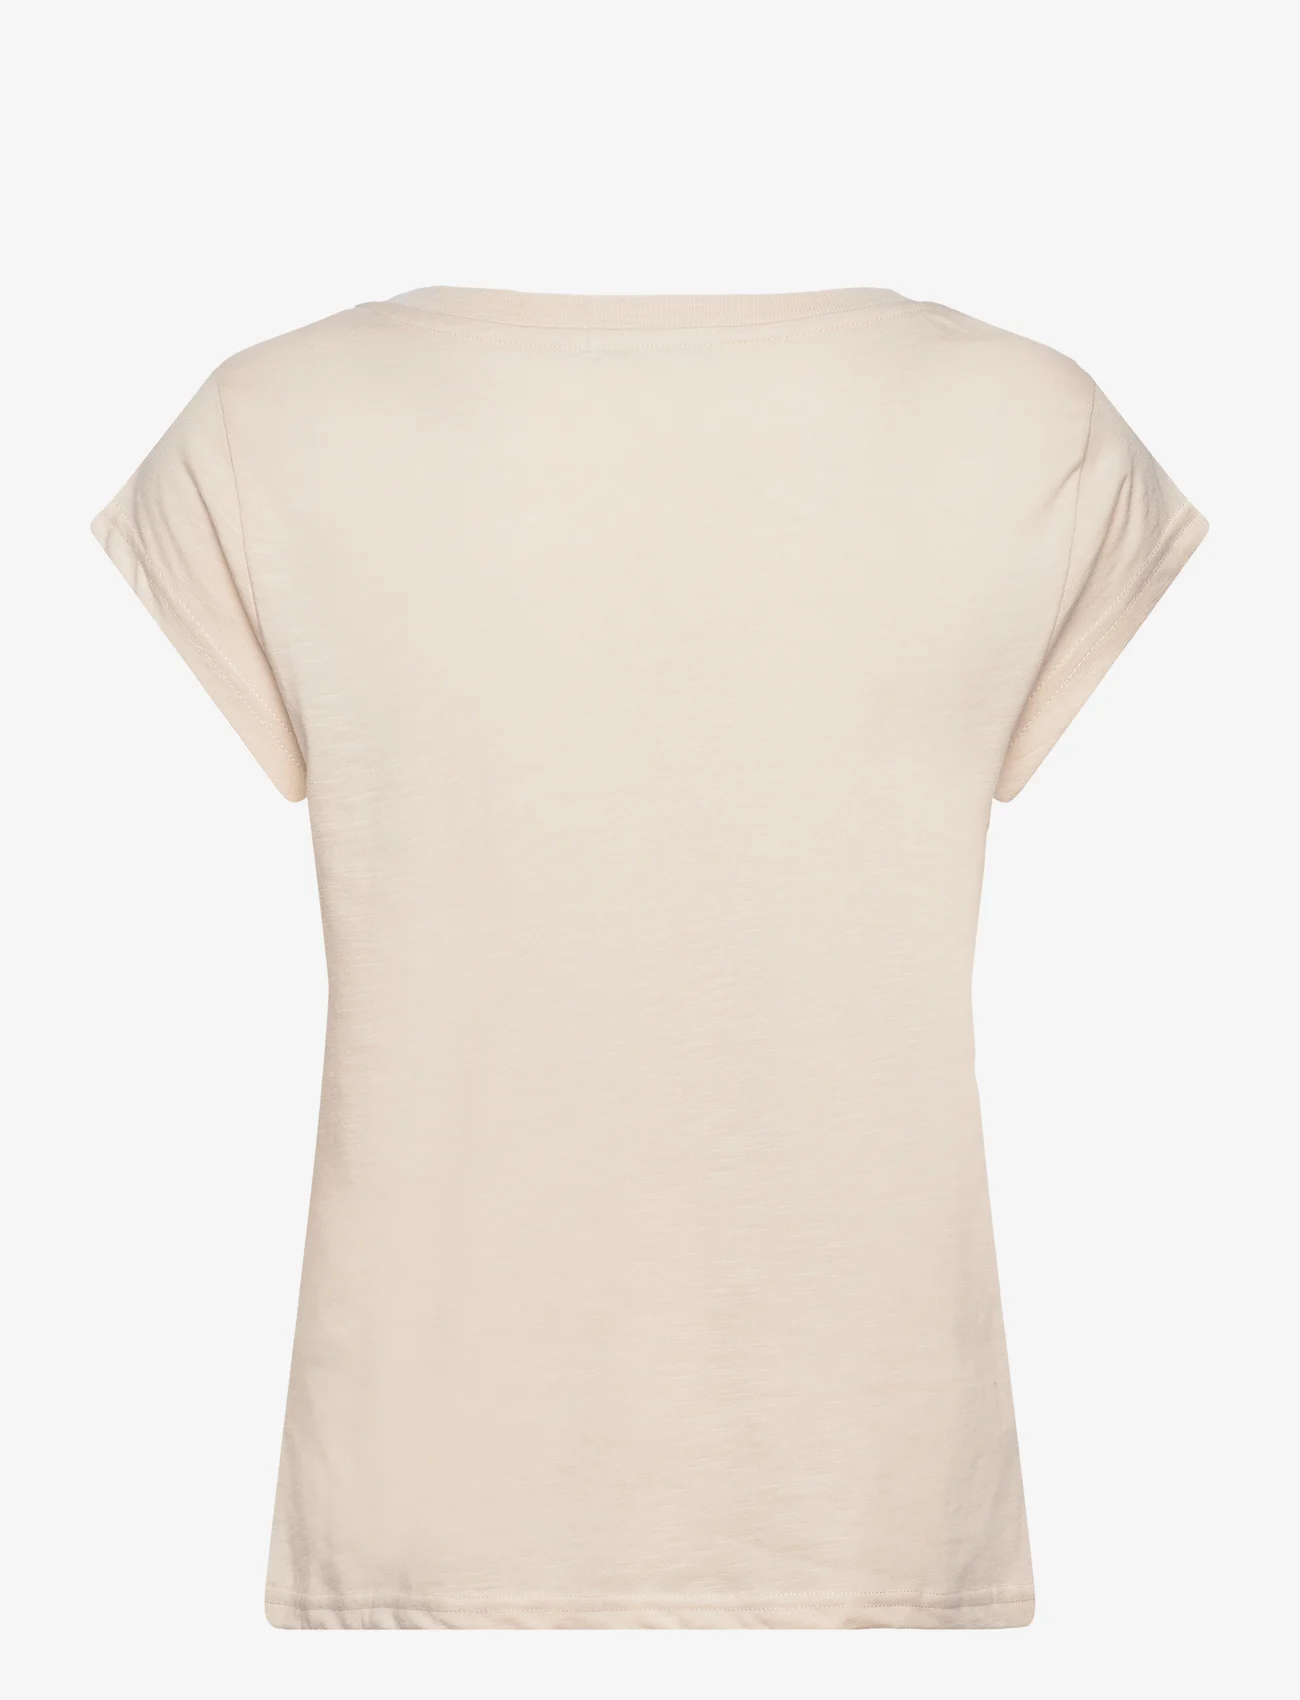 Coster Copenhagen - T-shirt with face print - Cap sleev - marškinėliai - creme - 1